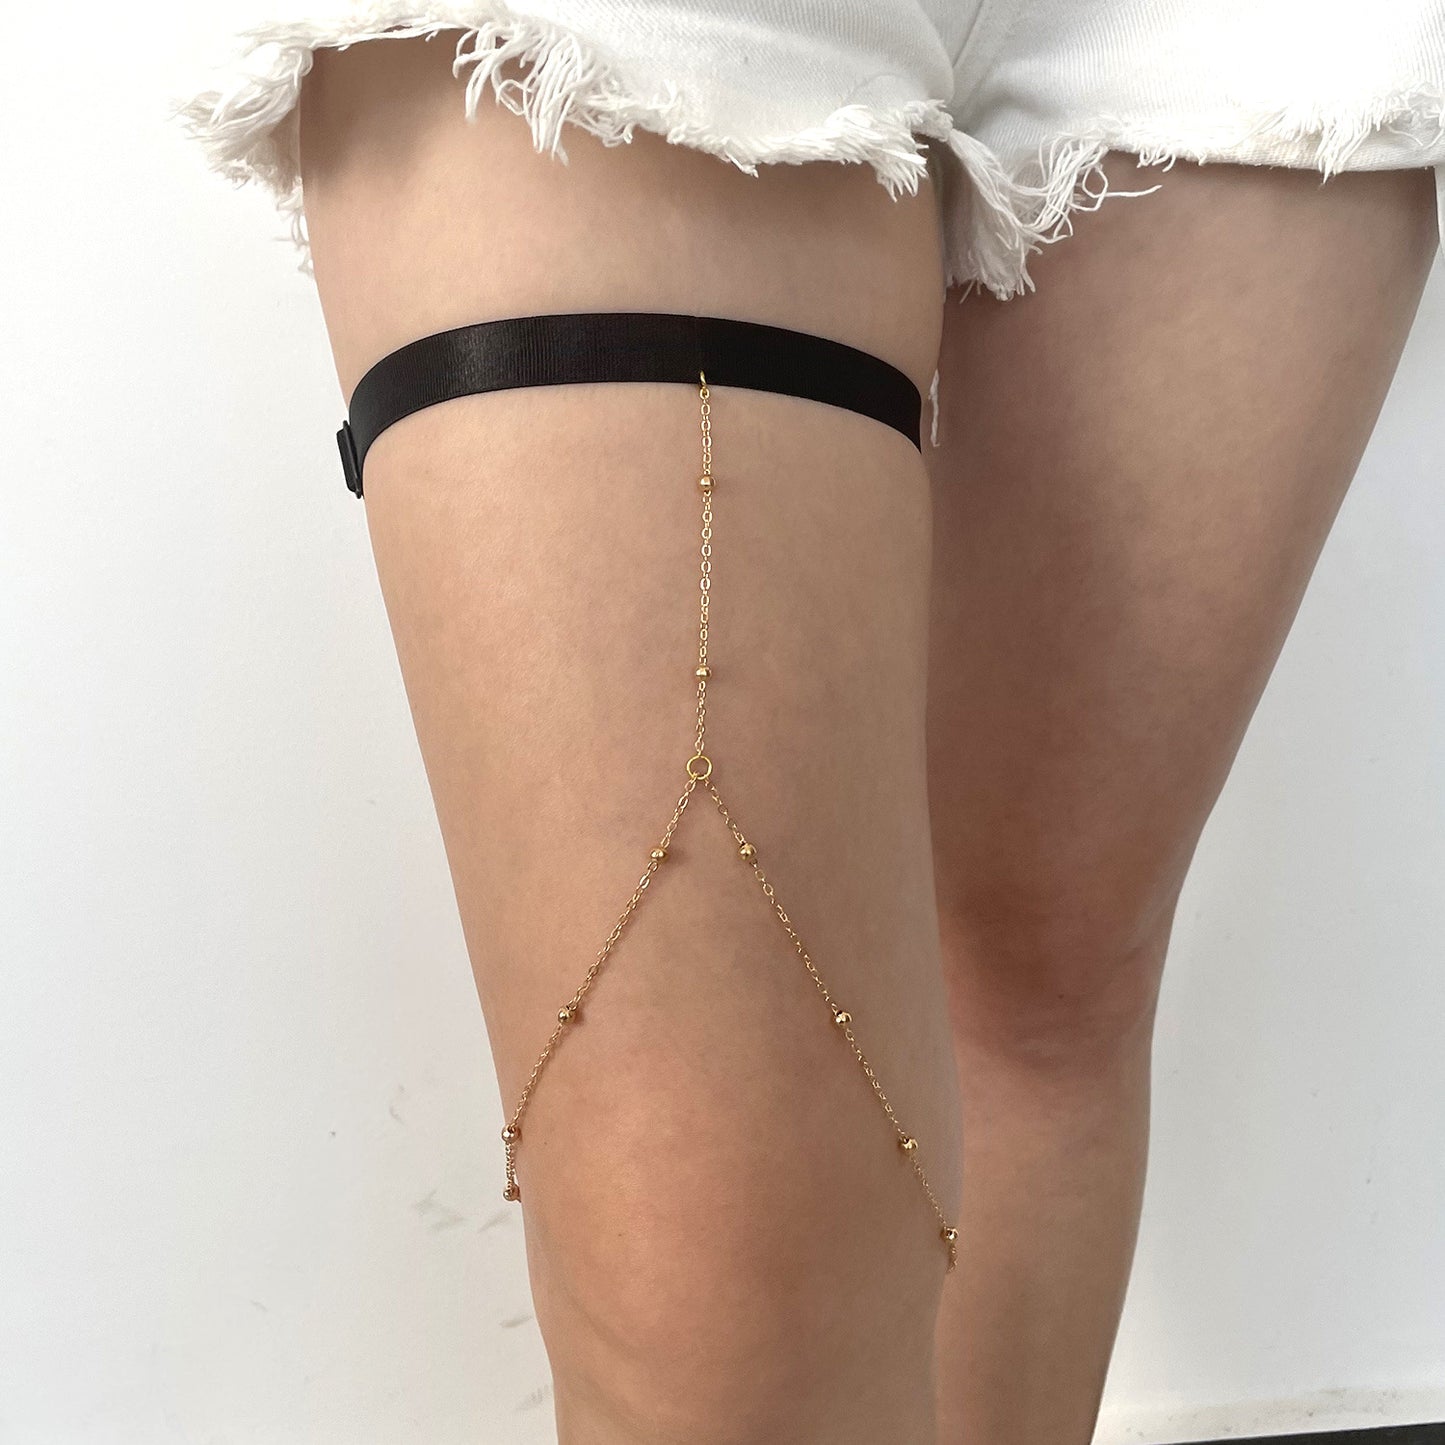 Intimate Garter Leg Latina Bdsm Bondage Lingerie Harness